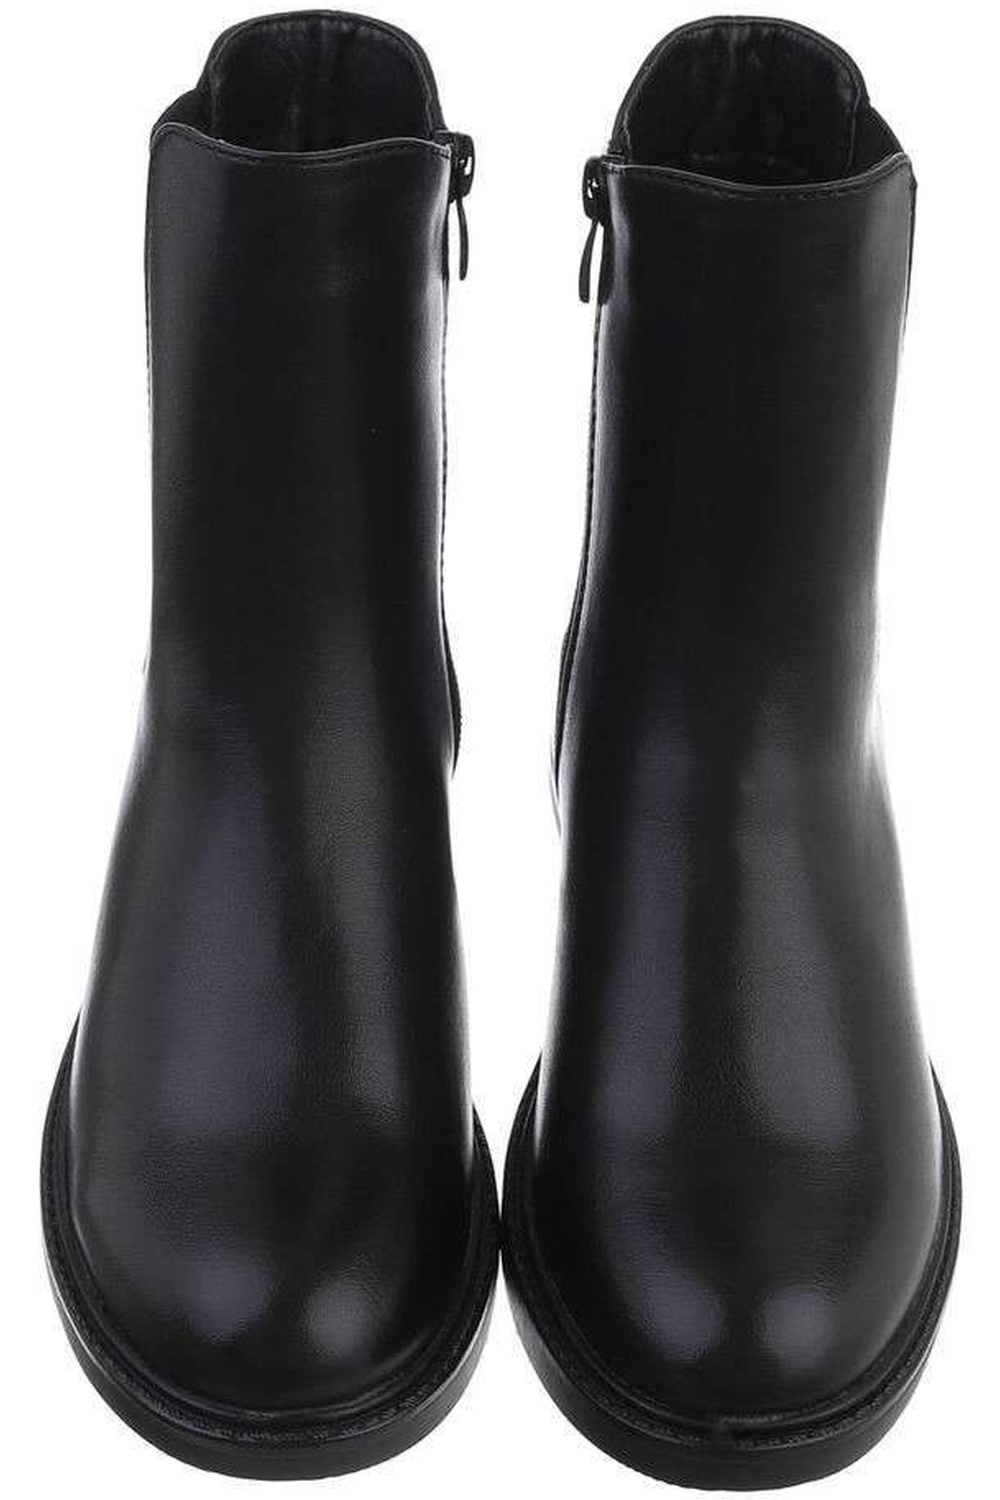 Chelsea Boots 6543-black